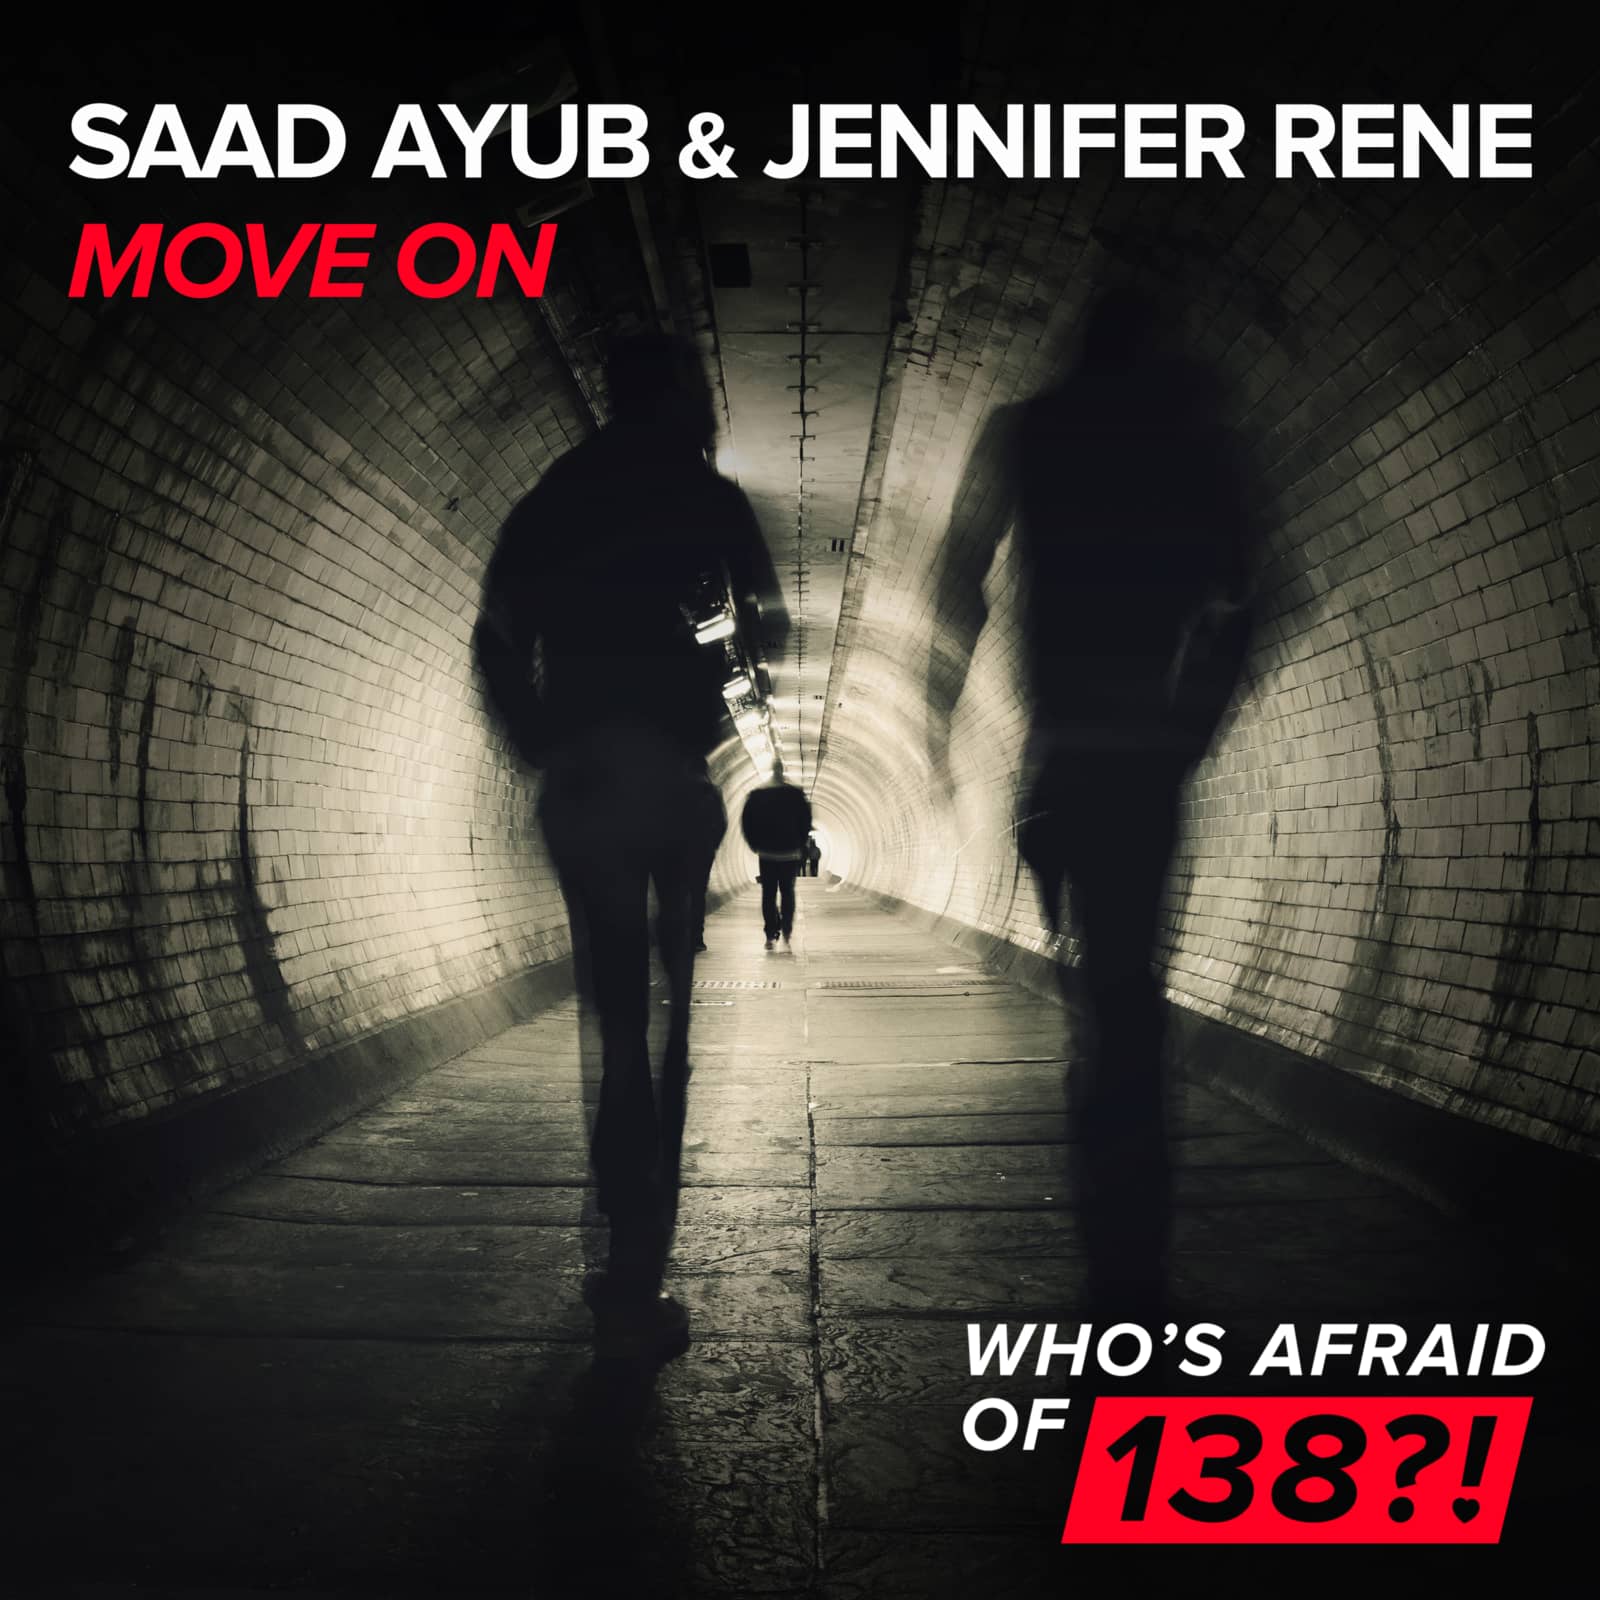 Move on. Saad Ayub. On the move. Who afraid of группа. Move (move on up).